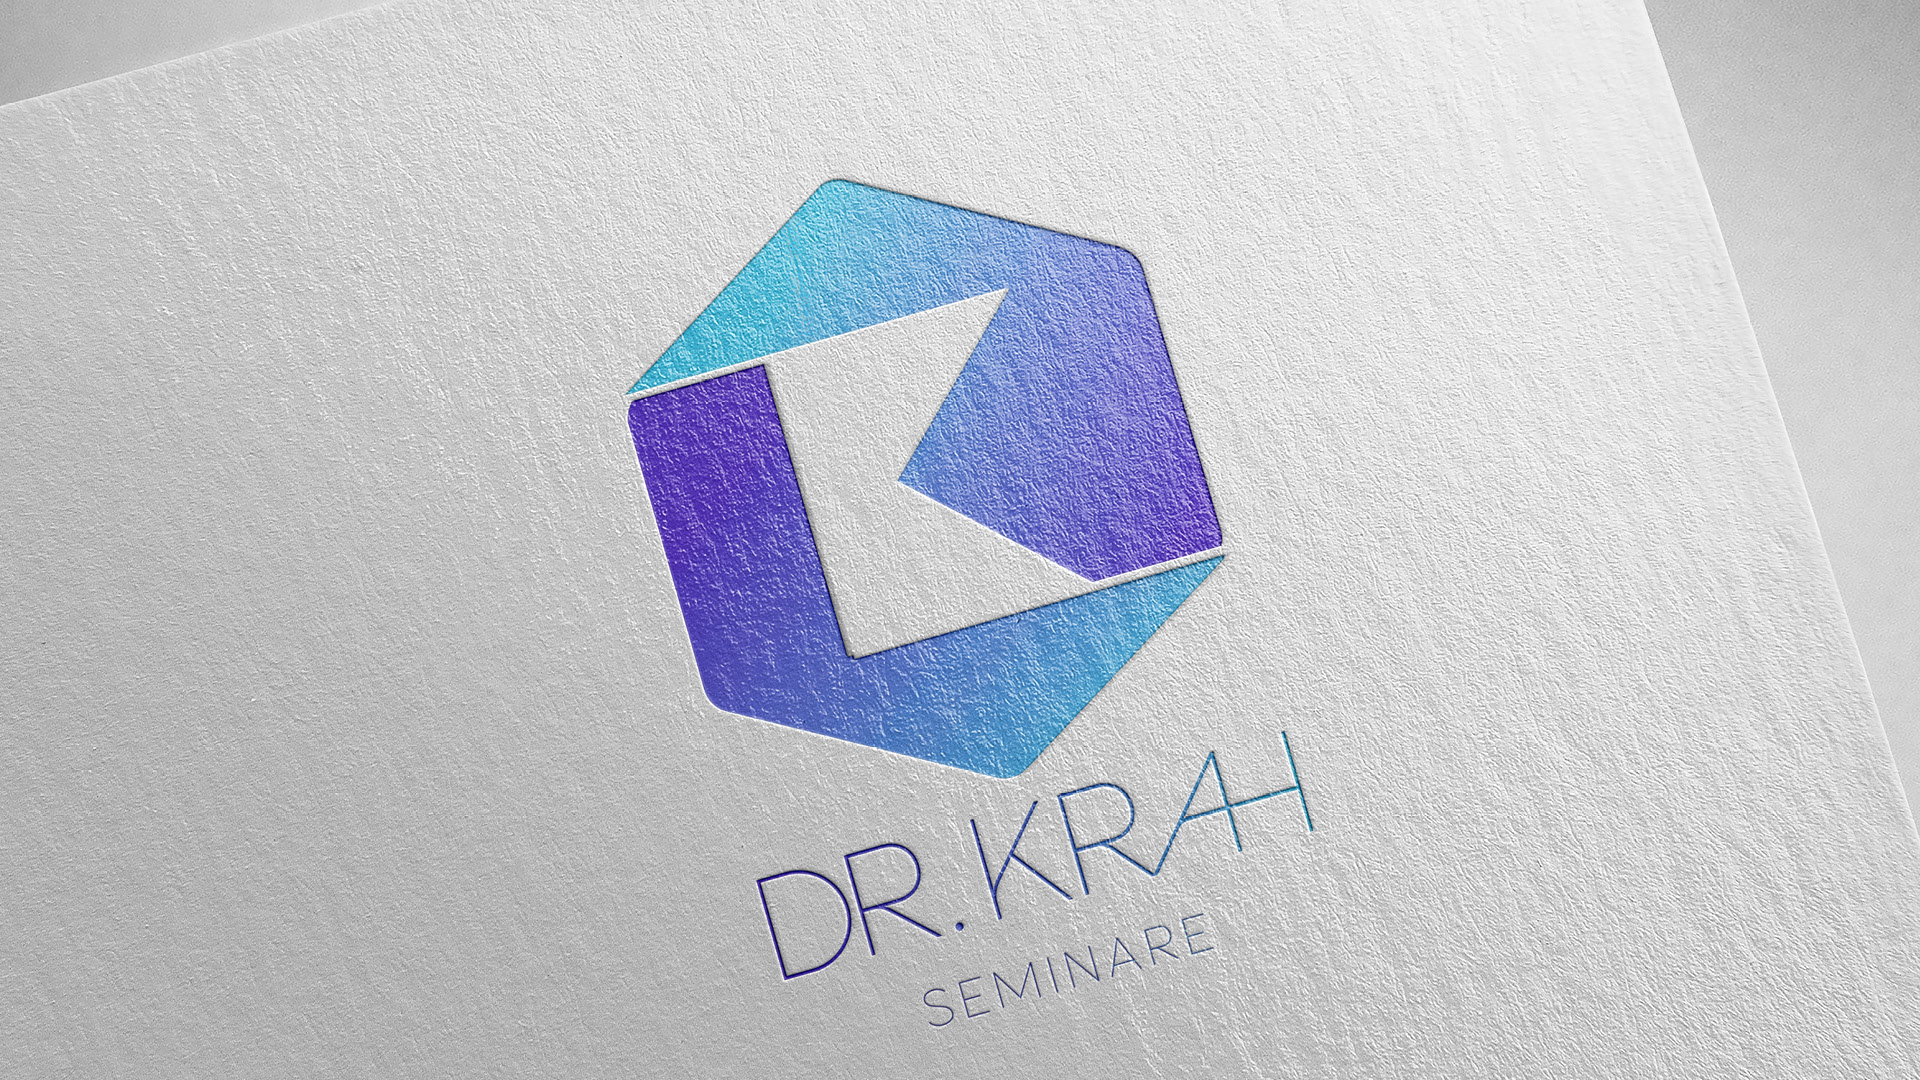 Dr_Krah_Seminare1